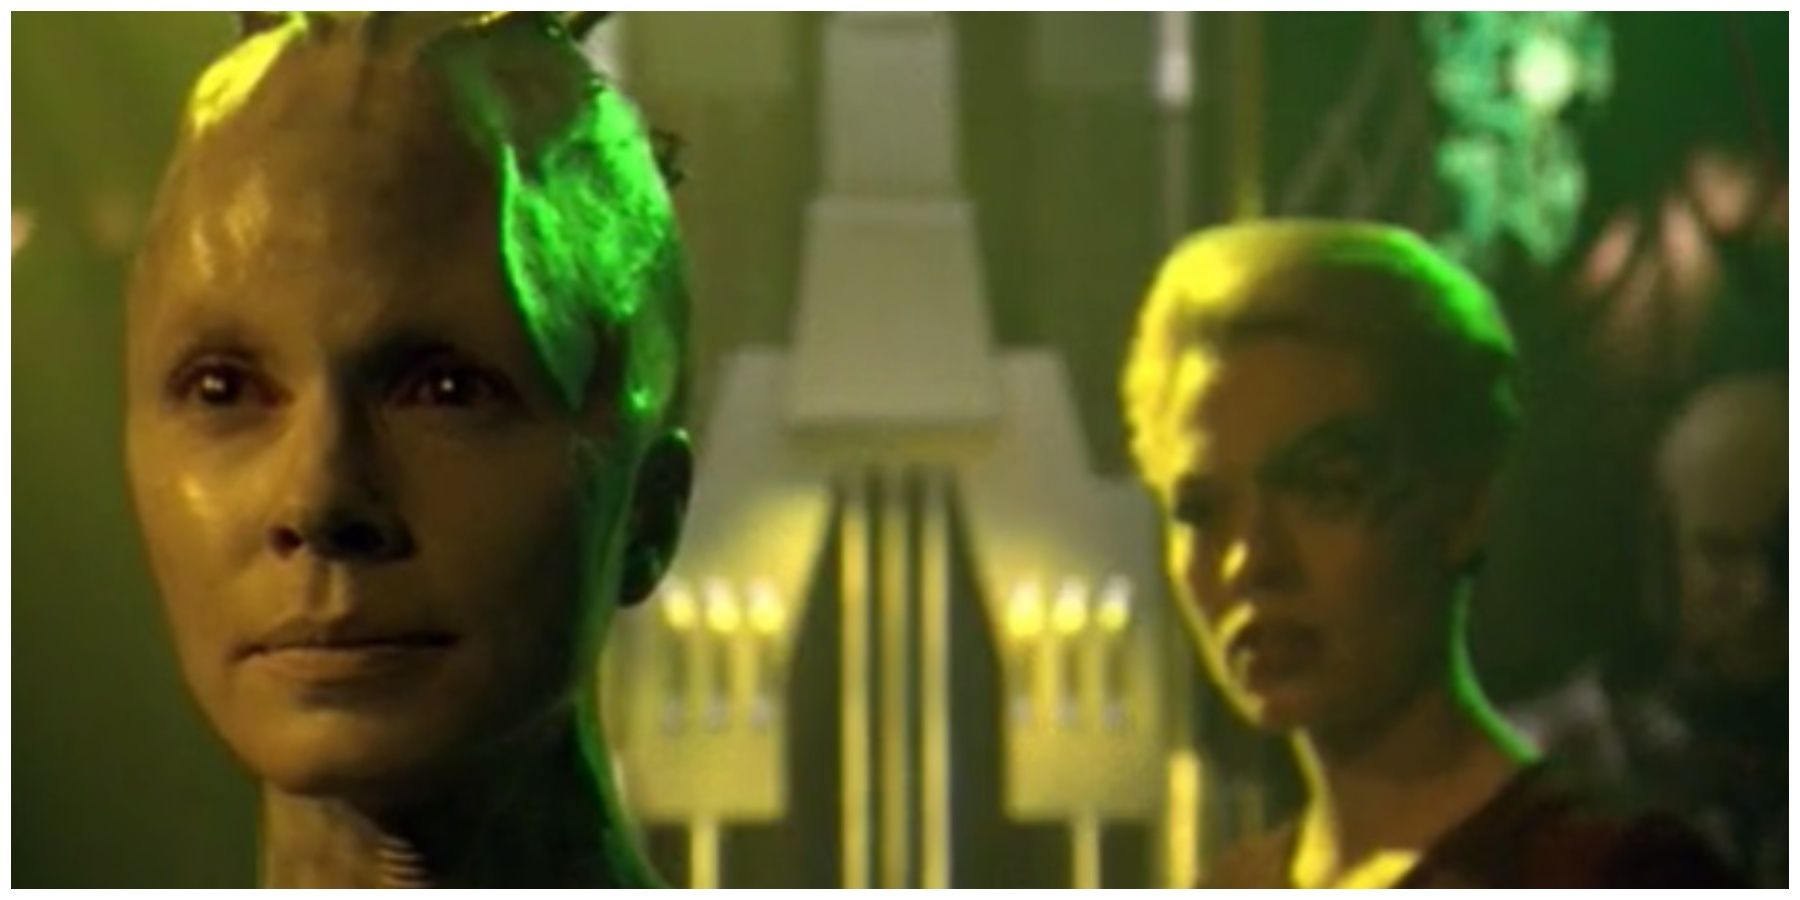 Alice Krige as the Borg Queen. Jeri Ryan as Seven of Nine.